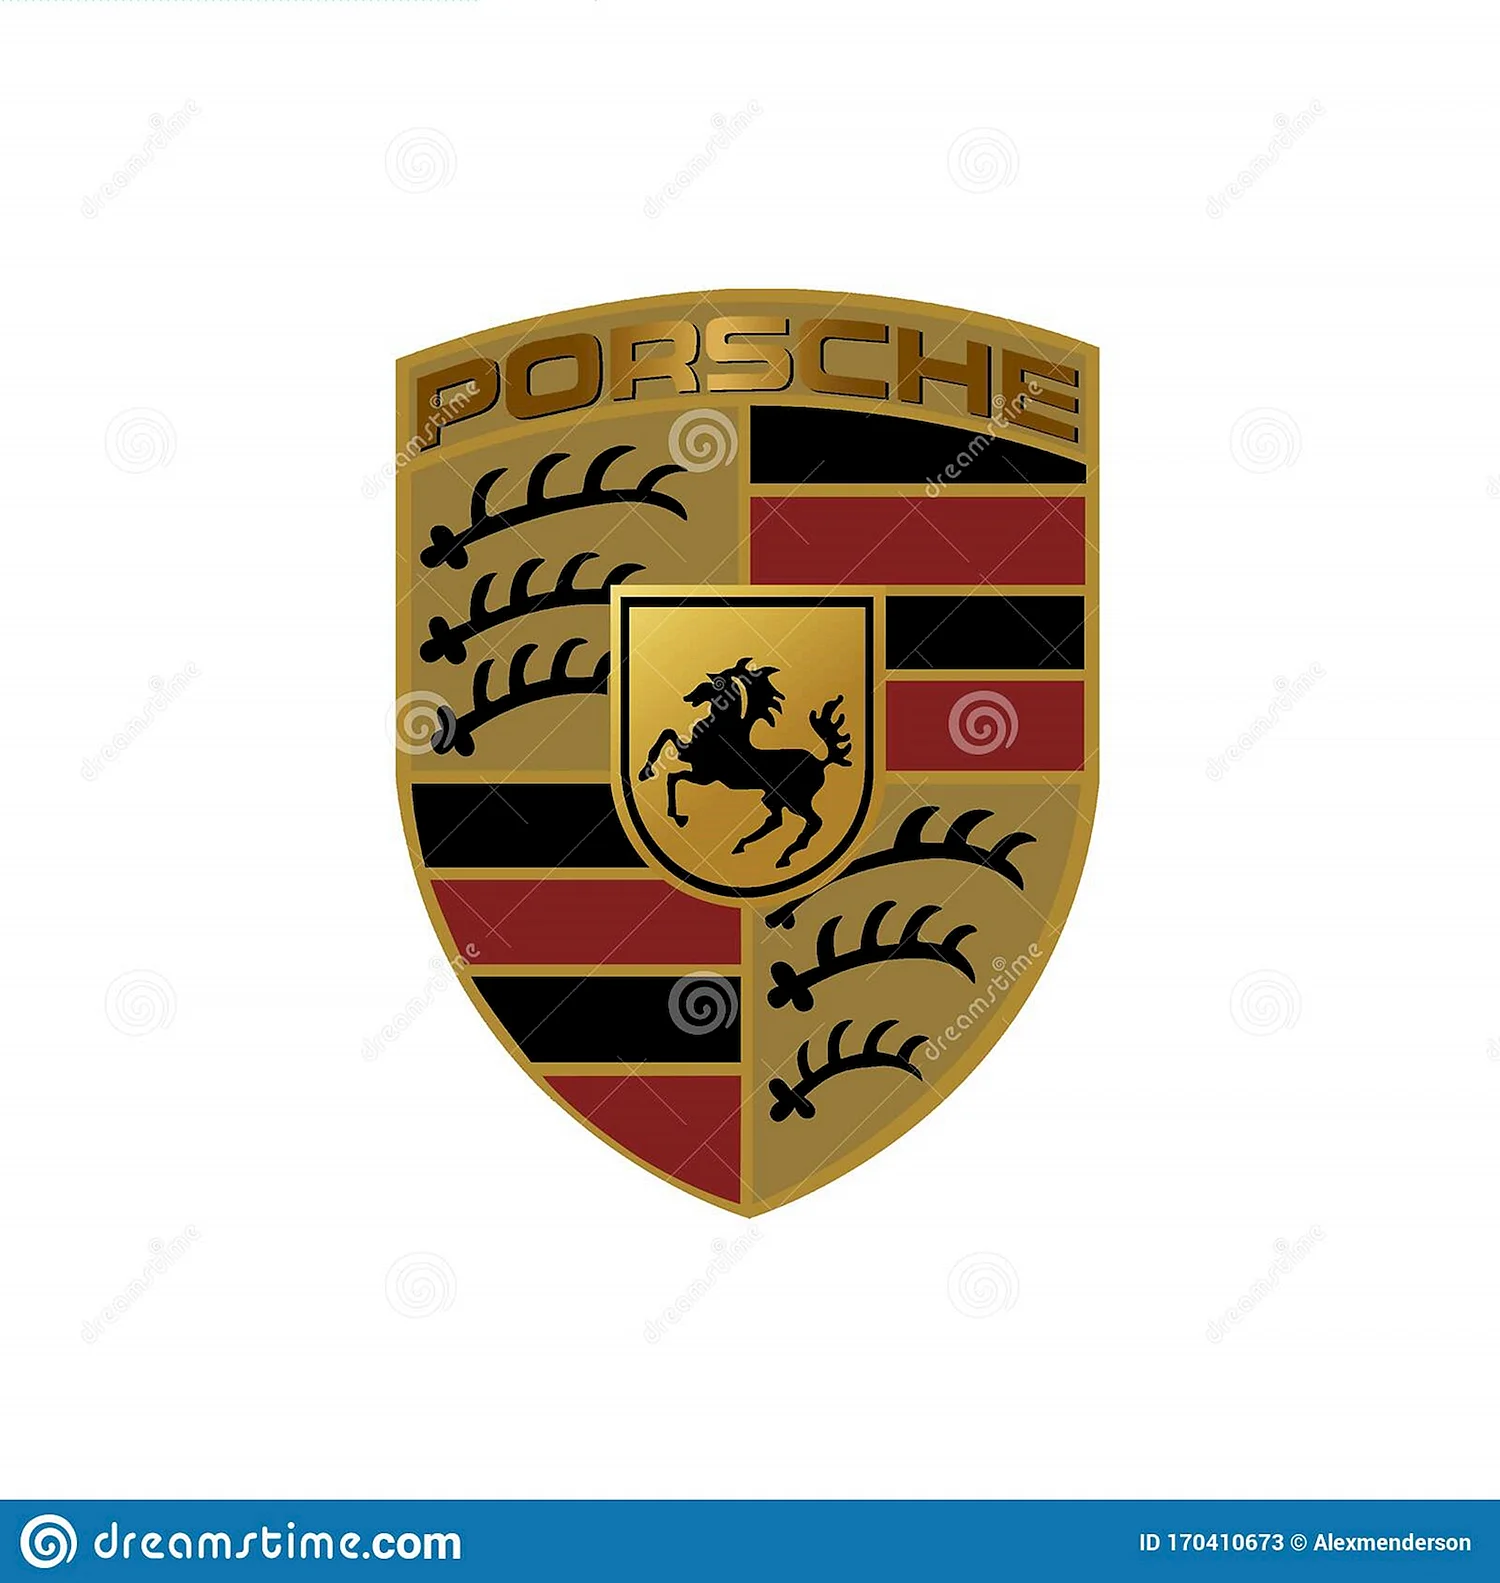 Porsche logo полукруглая